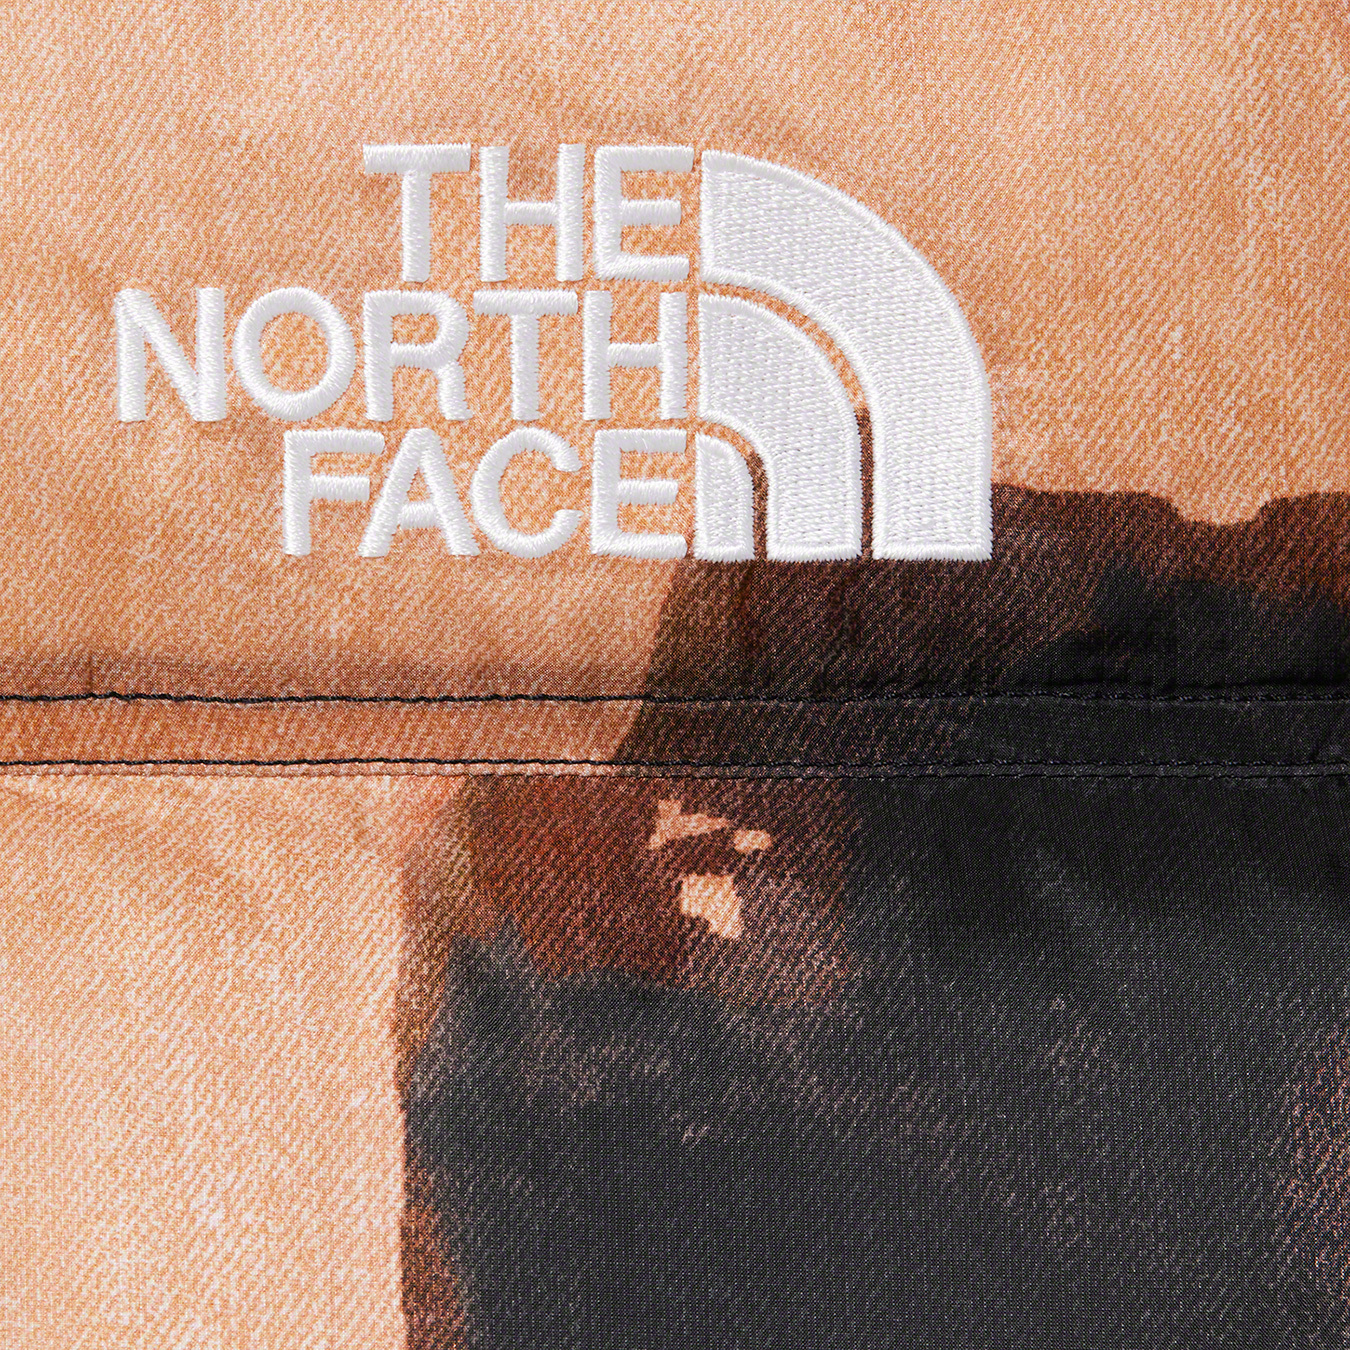 Supreme x The North Face Nuptse Jacket Bleached Denim Size Large